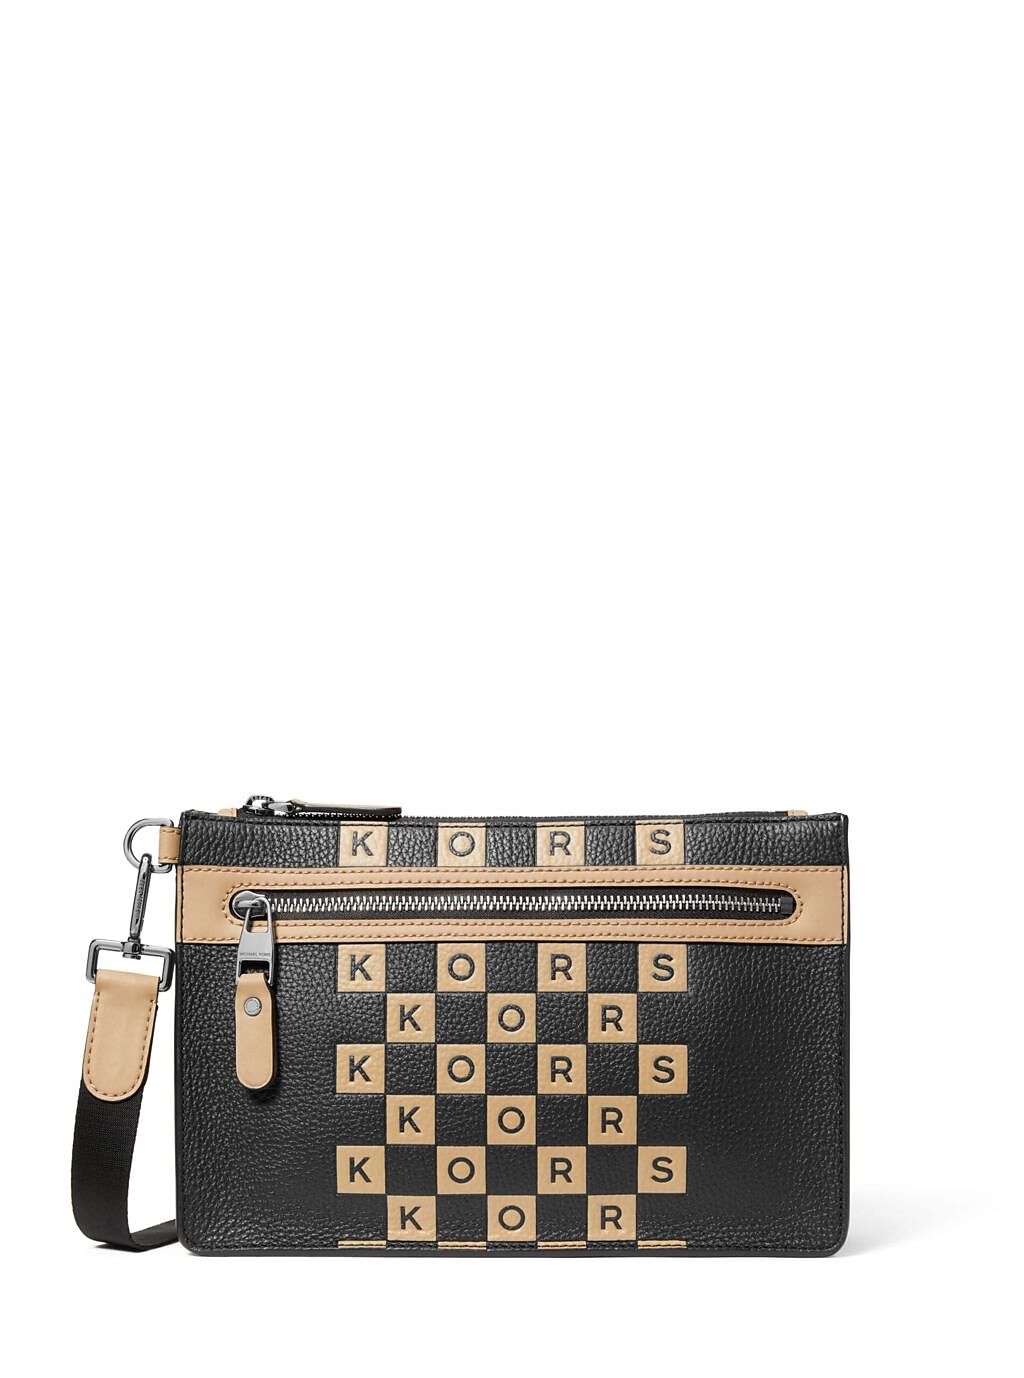 MICHAEL KORS Hudson 皮革黑駝棋盤格斜背包，1萬5700元。（MICHAEL KORS提供）